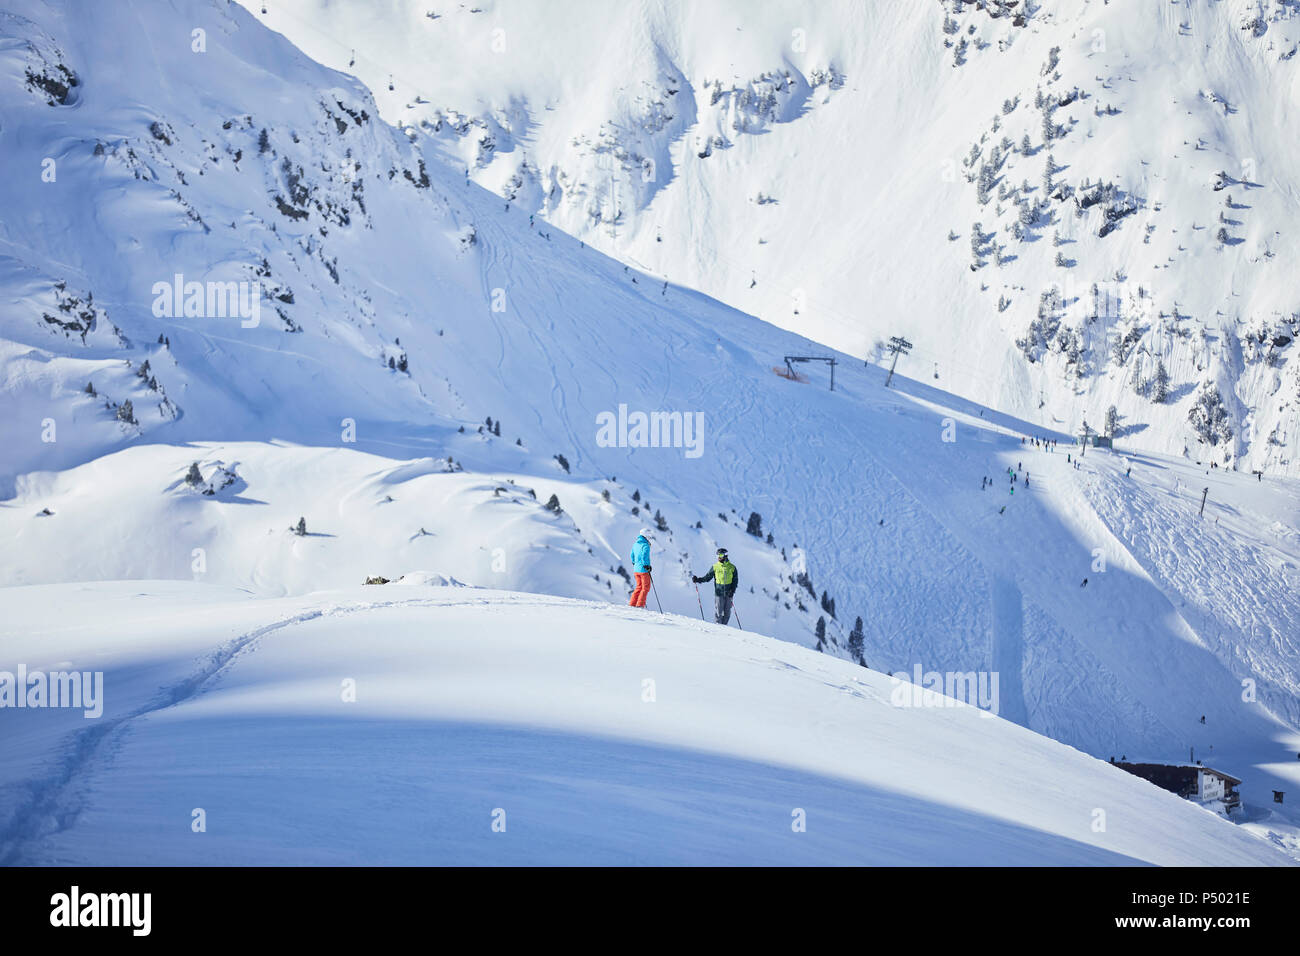 Austria, Tyrol, Kuehtai, two skiers in winter landscape Stock Photo